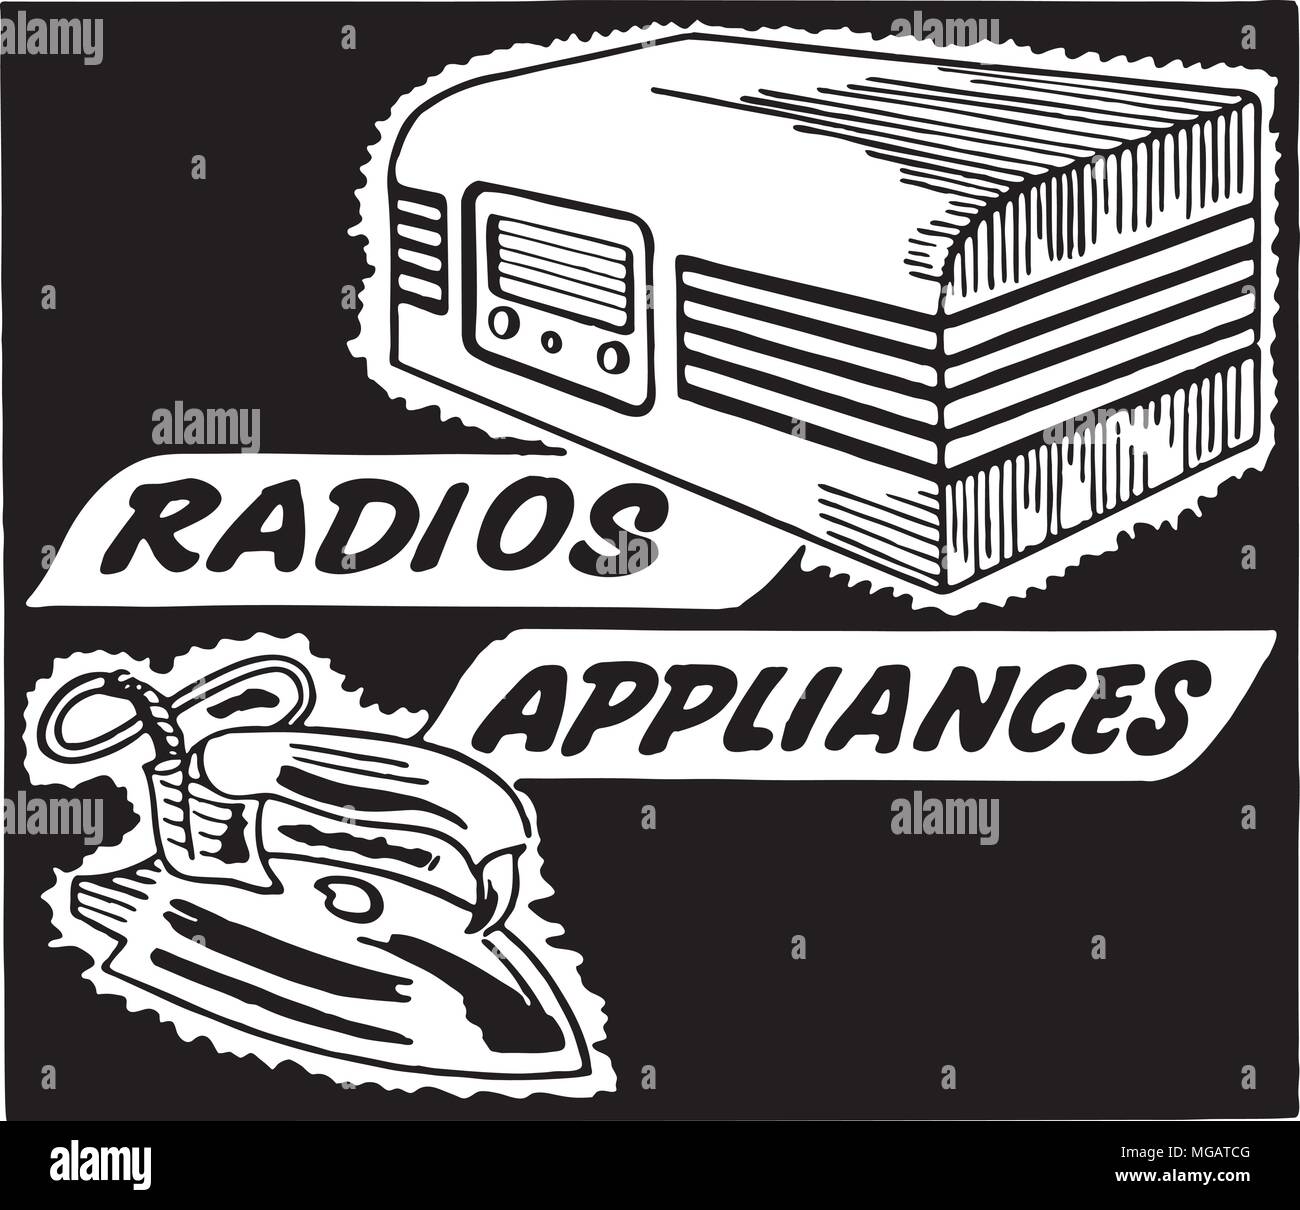 Radios Appliances - Retro Ad Art Banner Stock Vector